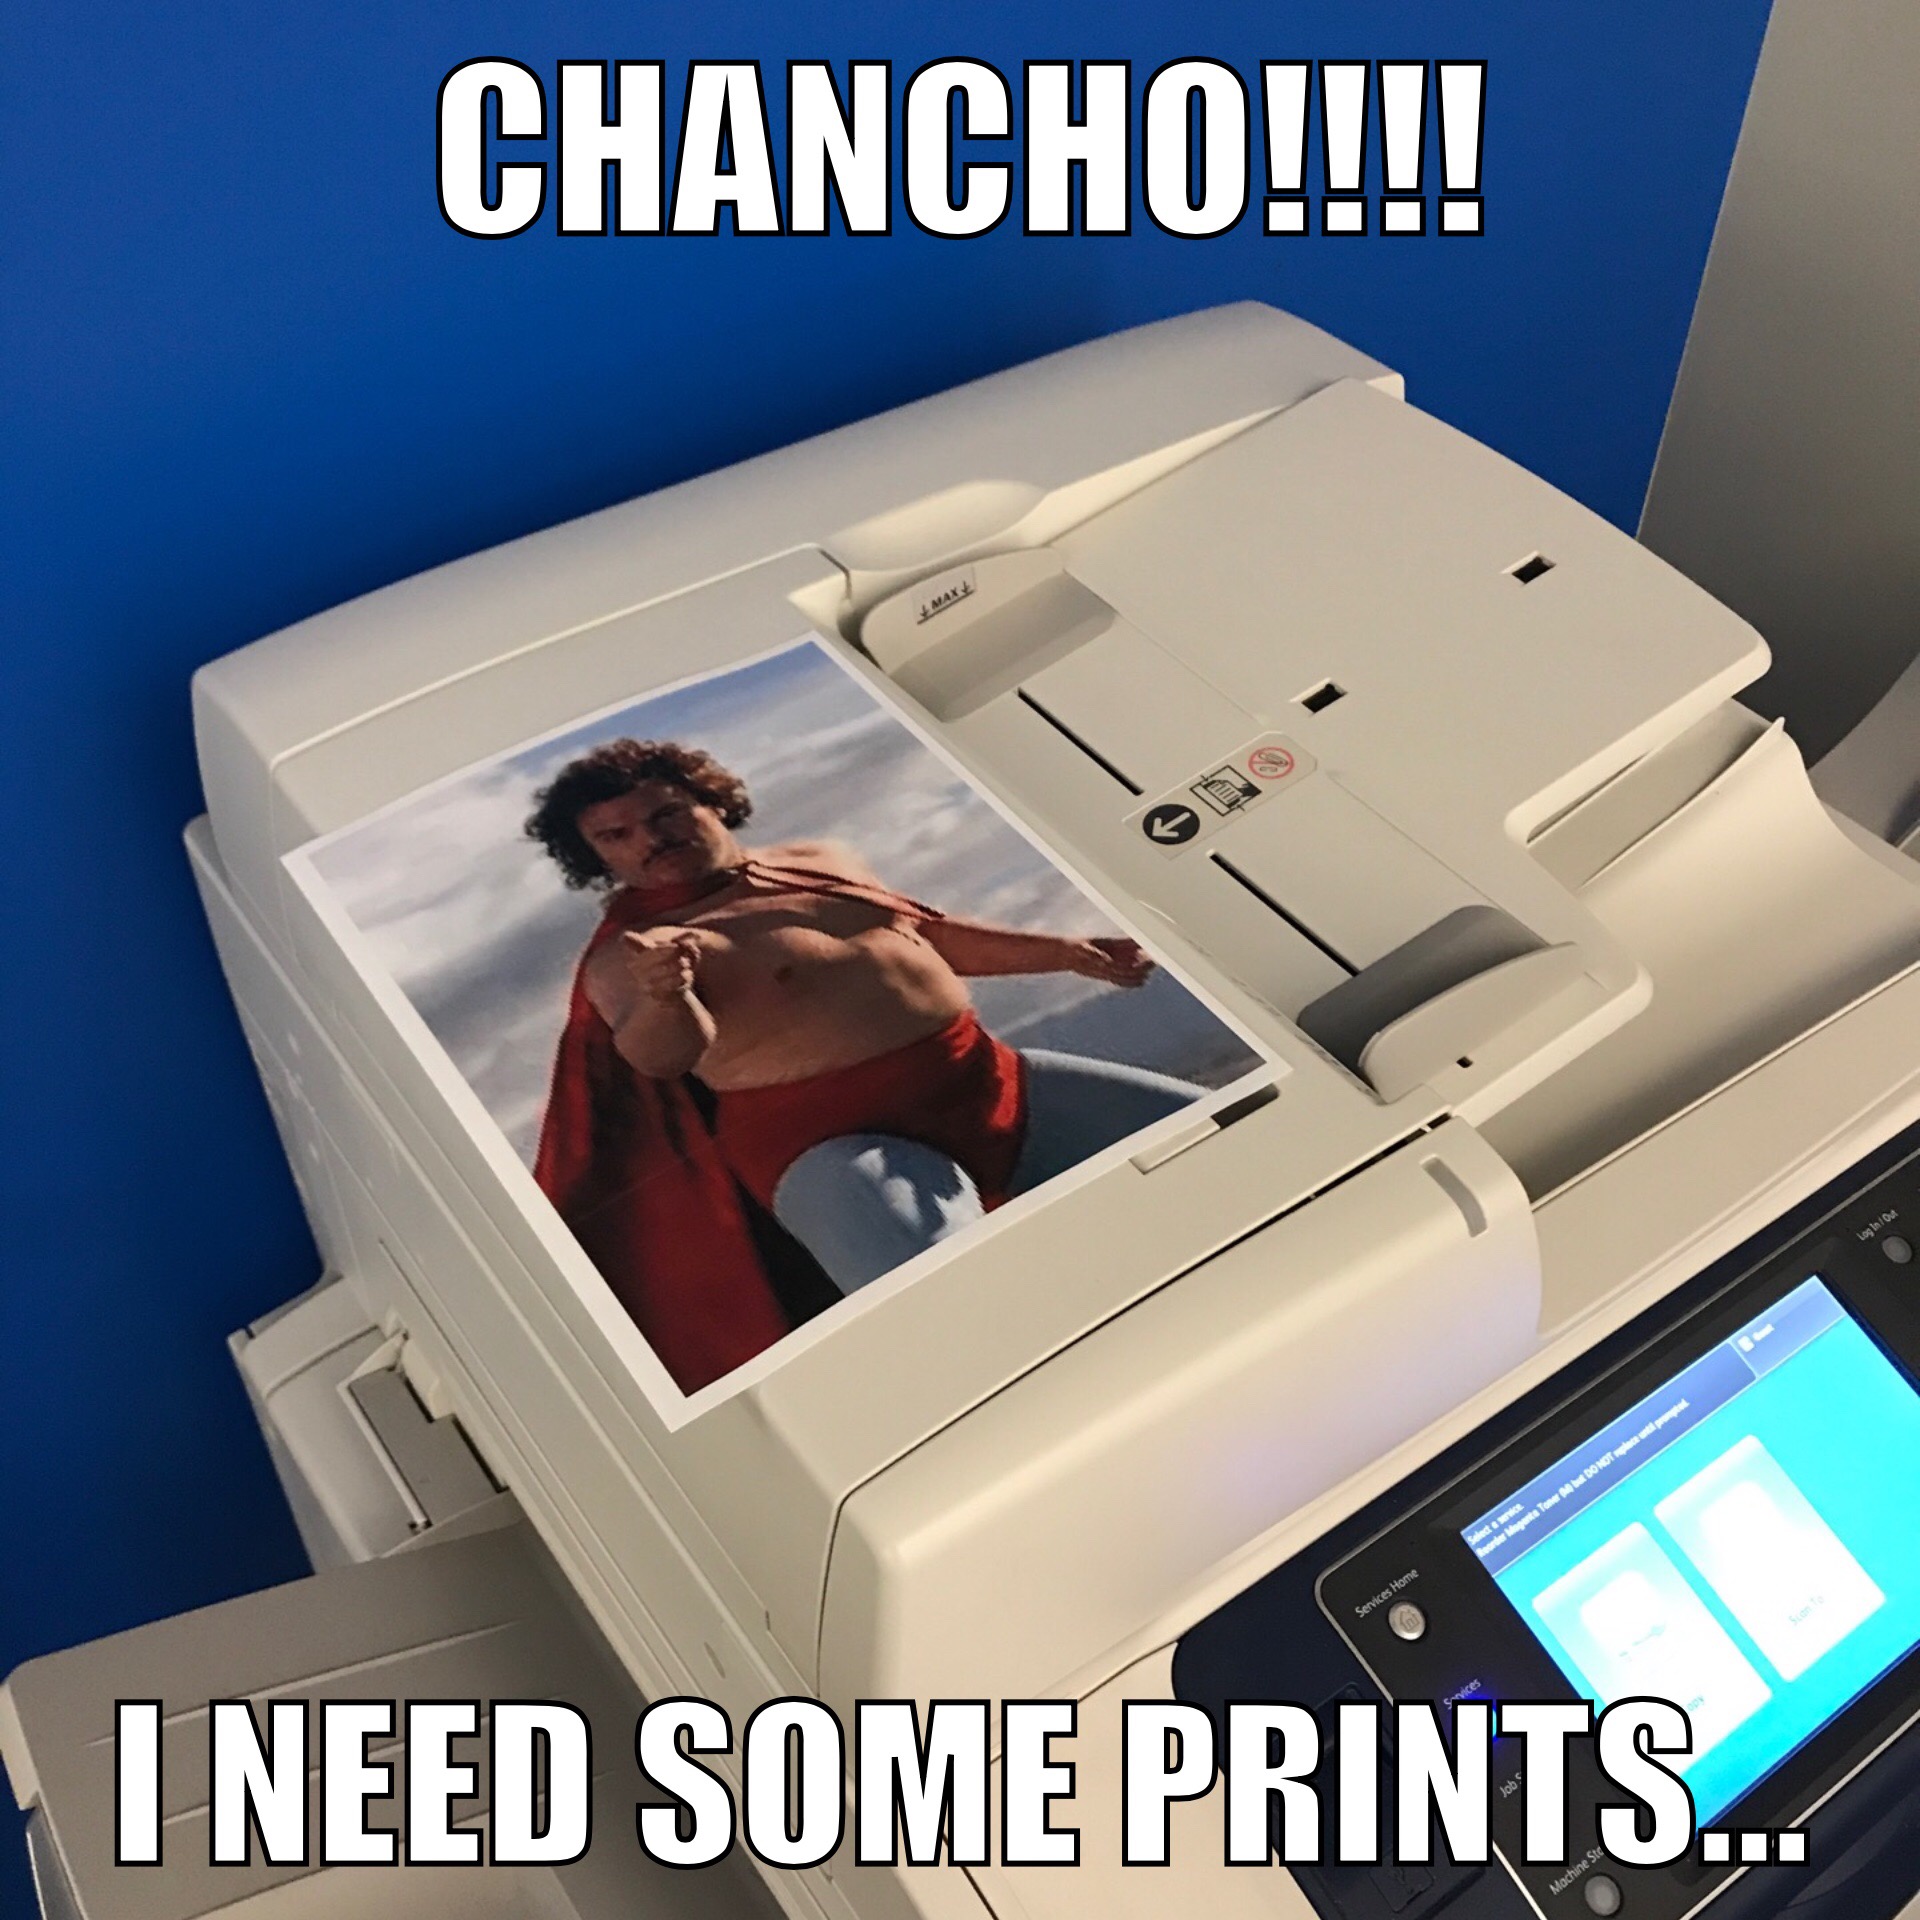 I send random print jobs to random printer in the office. Sometimes I walk by a printer and see my handy work.